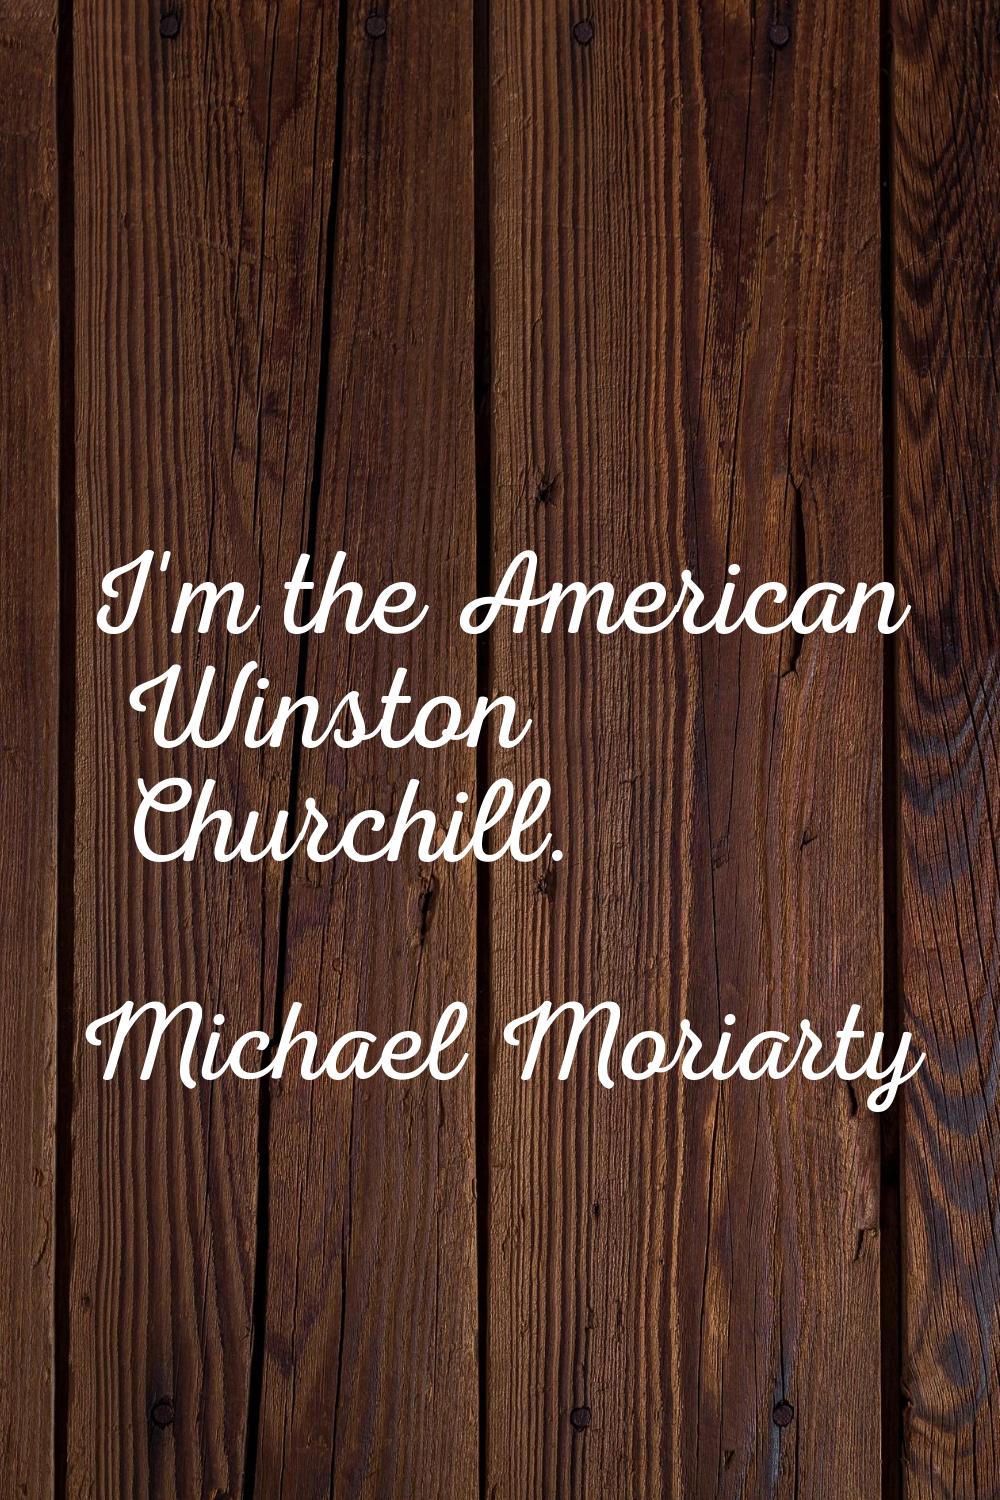 I'm the American Winston Churchill.